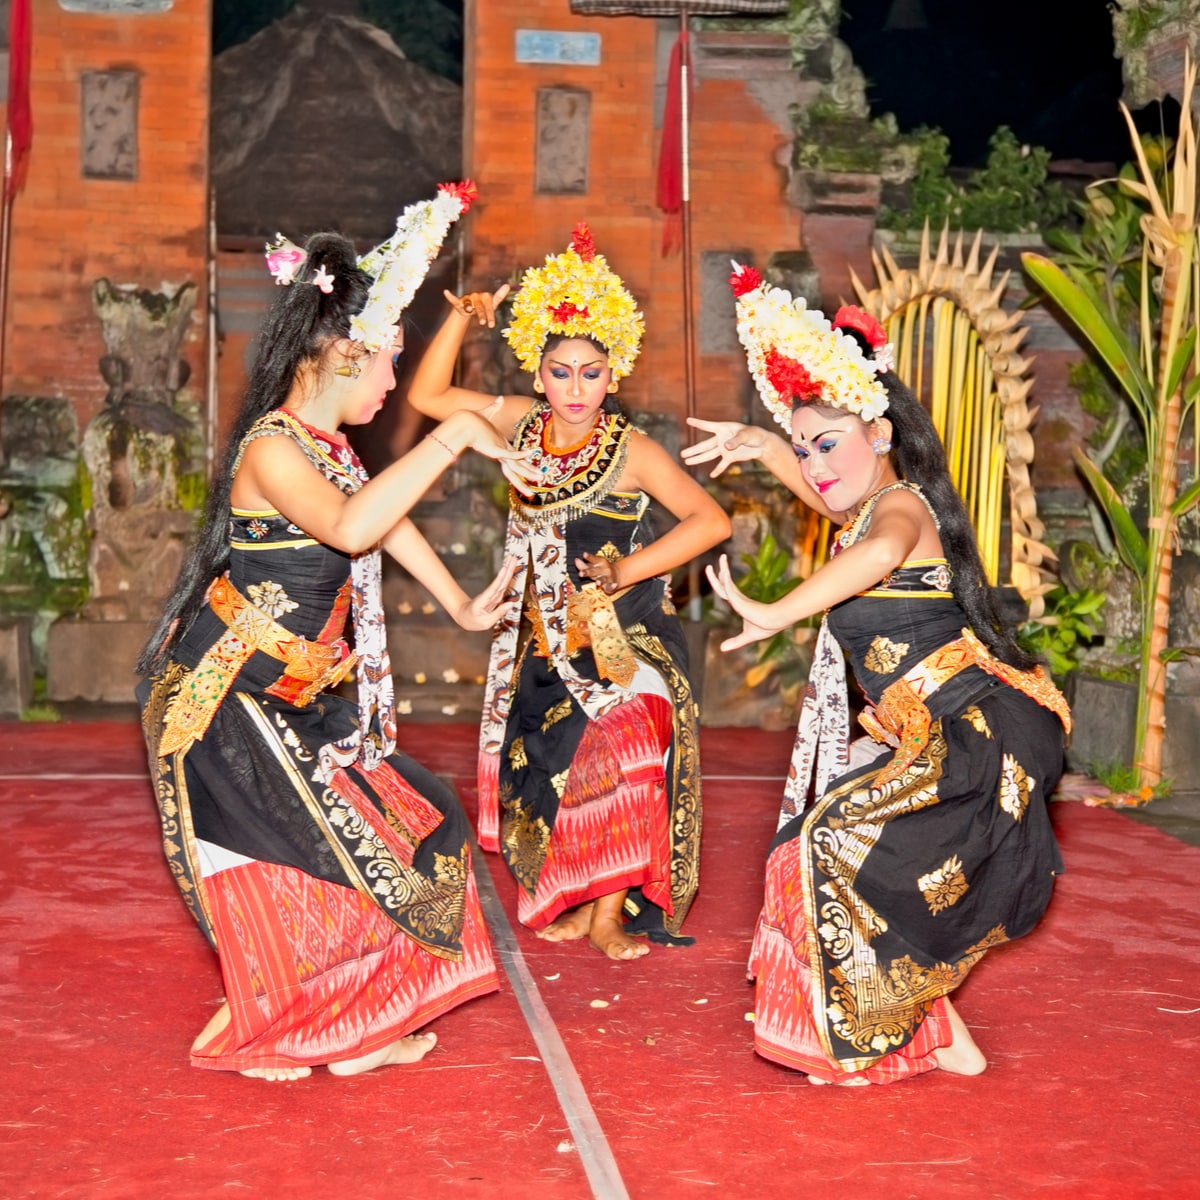 Discover Janger Dance: Bali's Joyful 1930s Dance Tradition